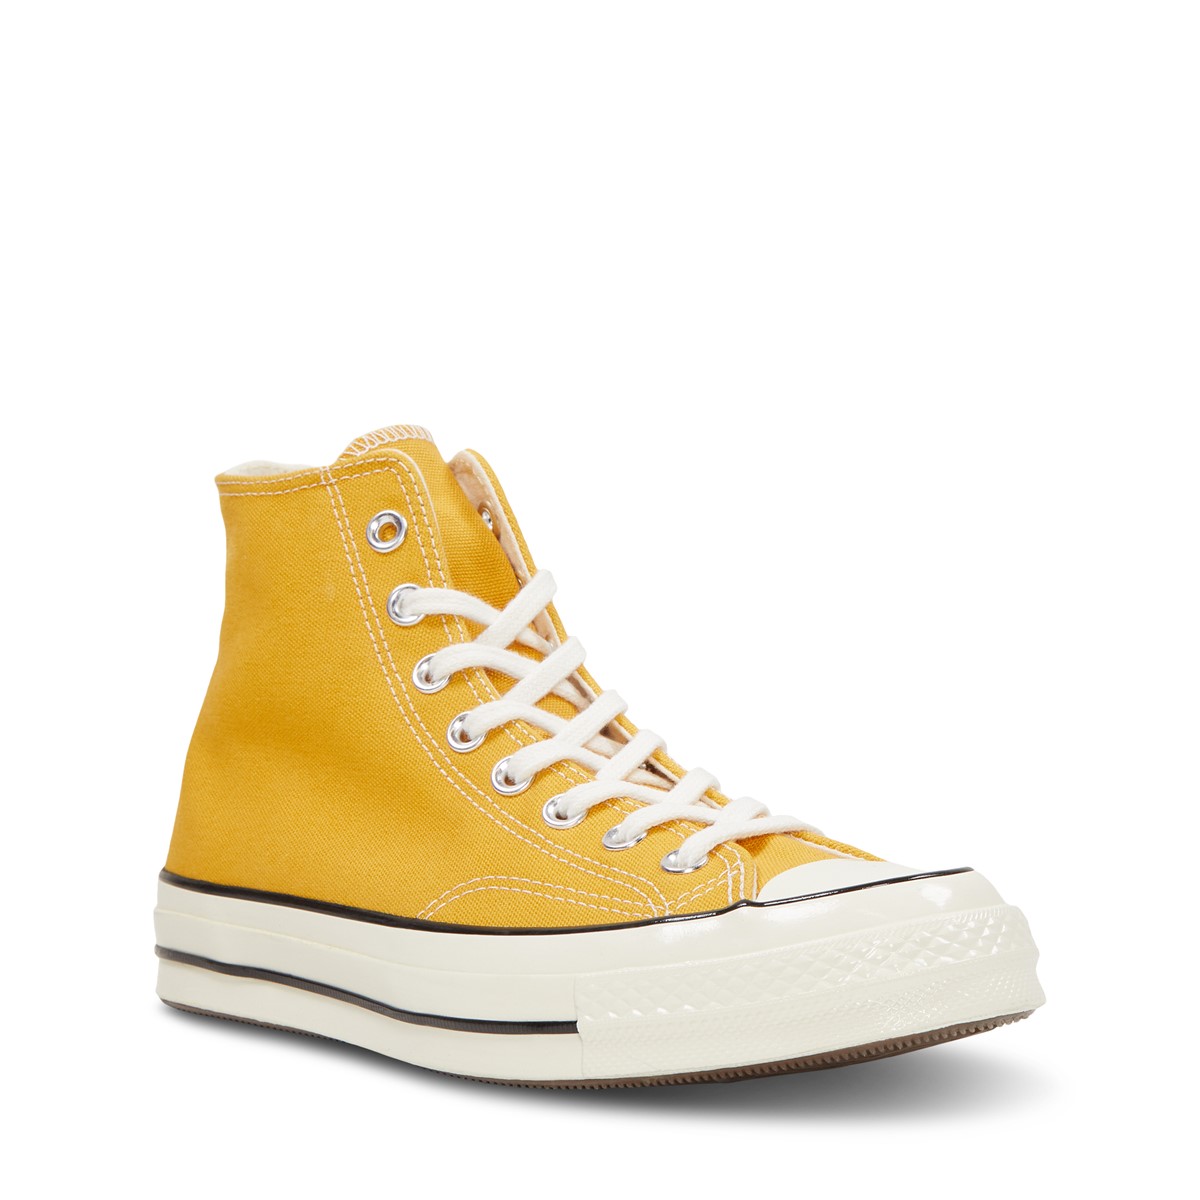 converse 70s yellow